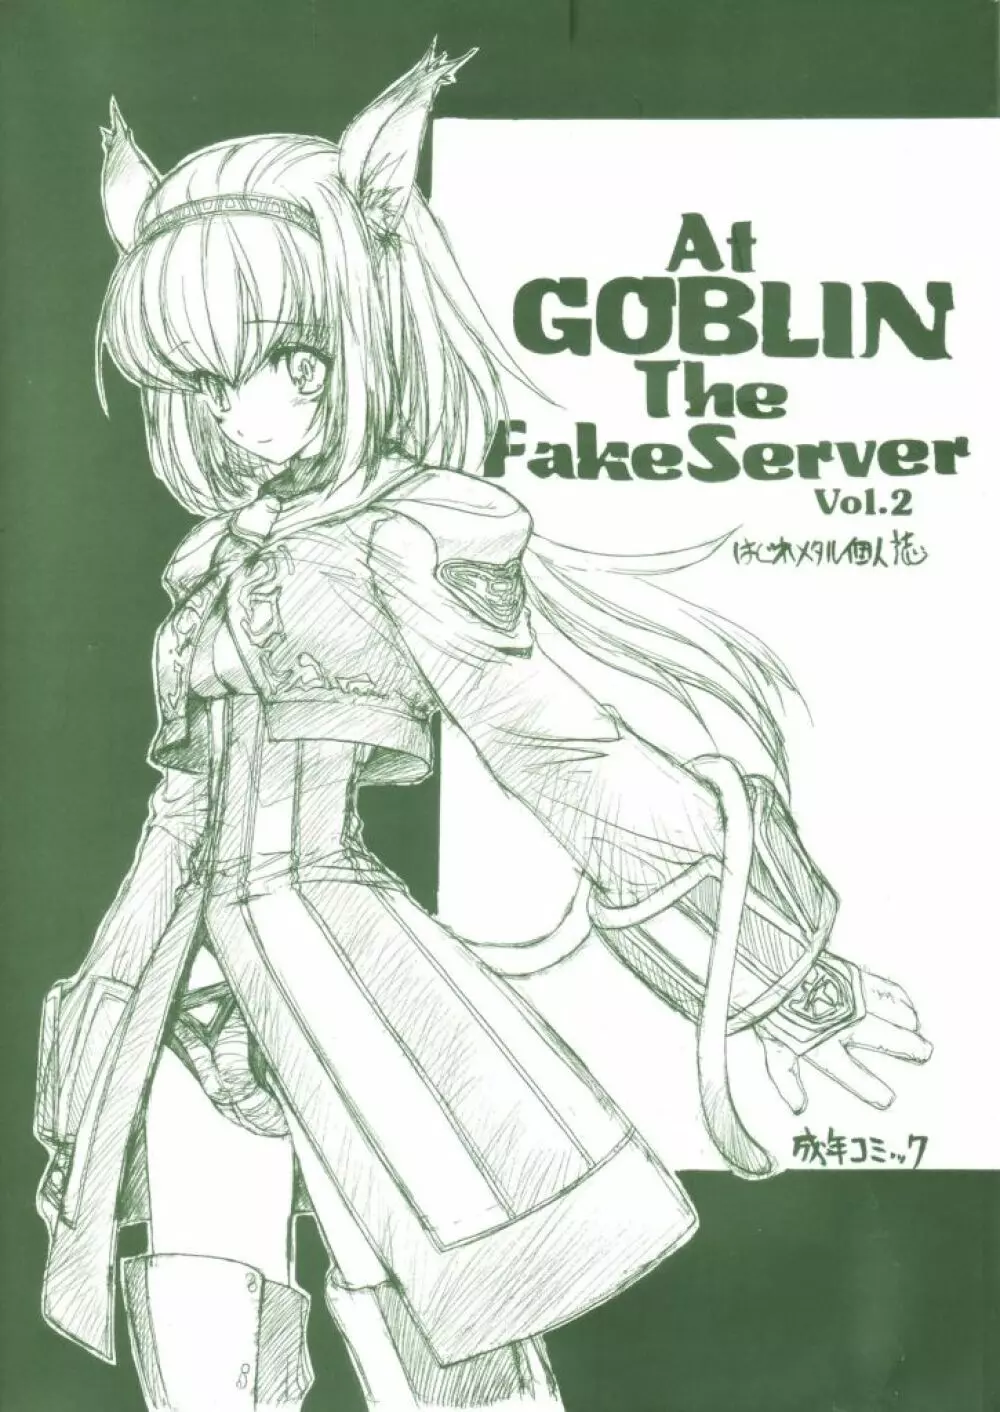 At Goblin The Fake Server Vol.2 - page1